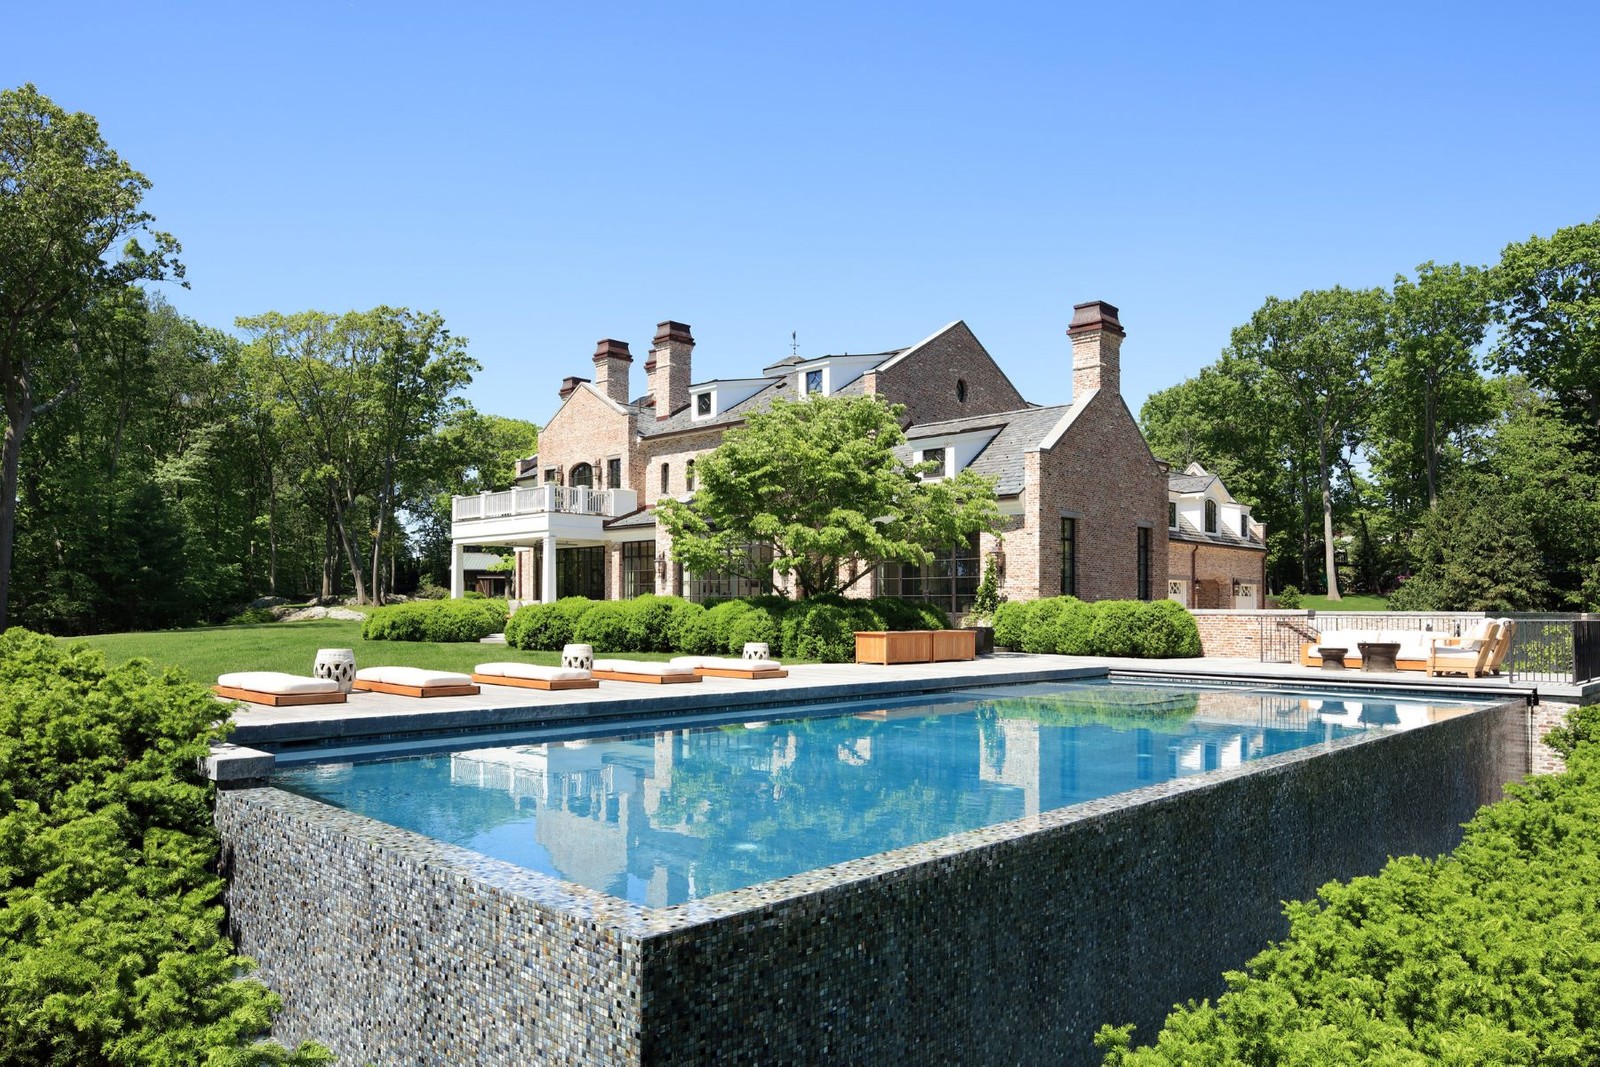 Tom Brady's Brookline, Massachusetts mansion is for sale